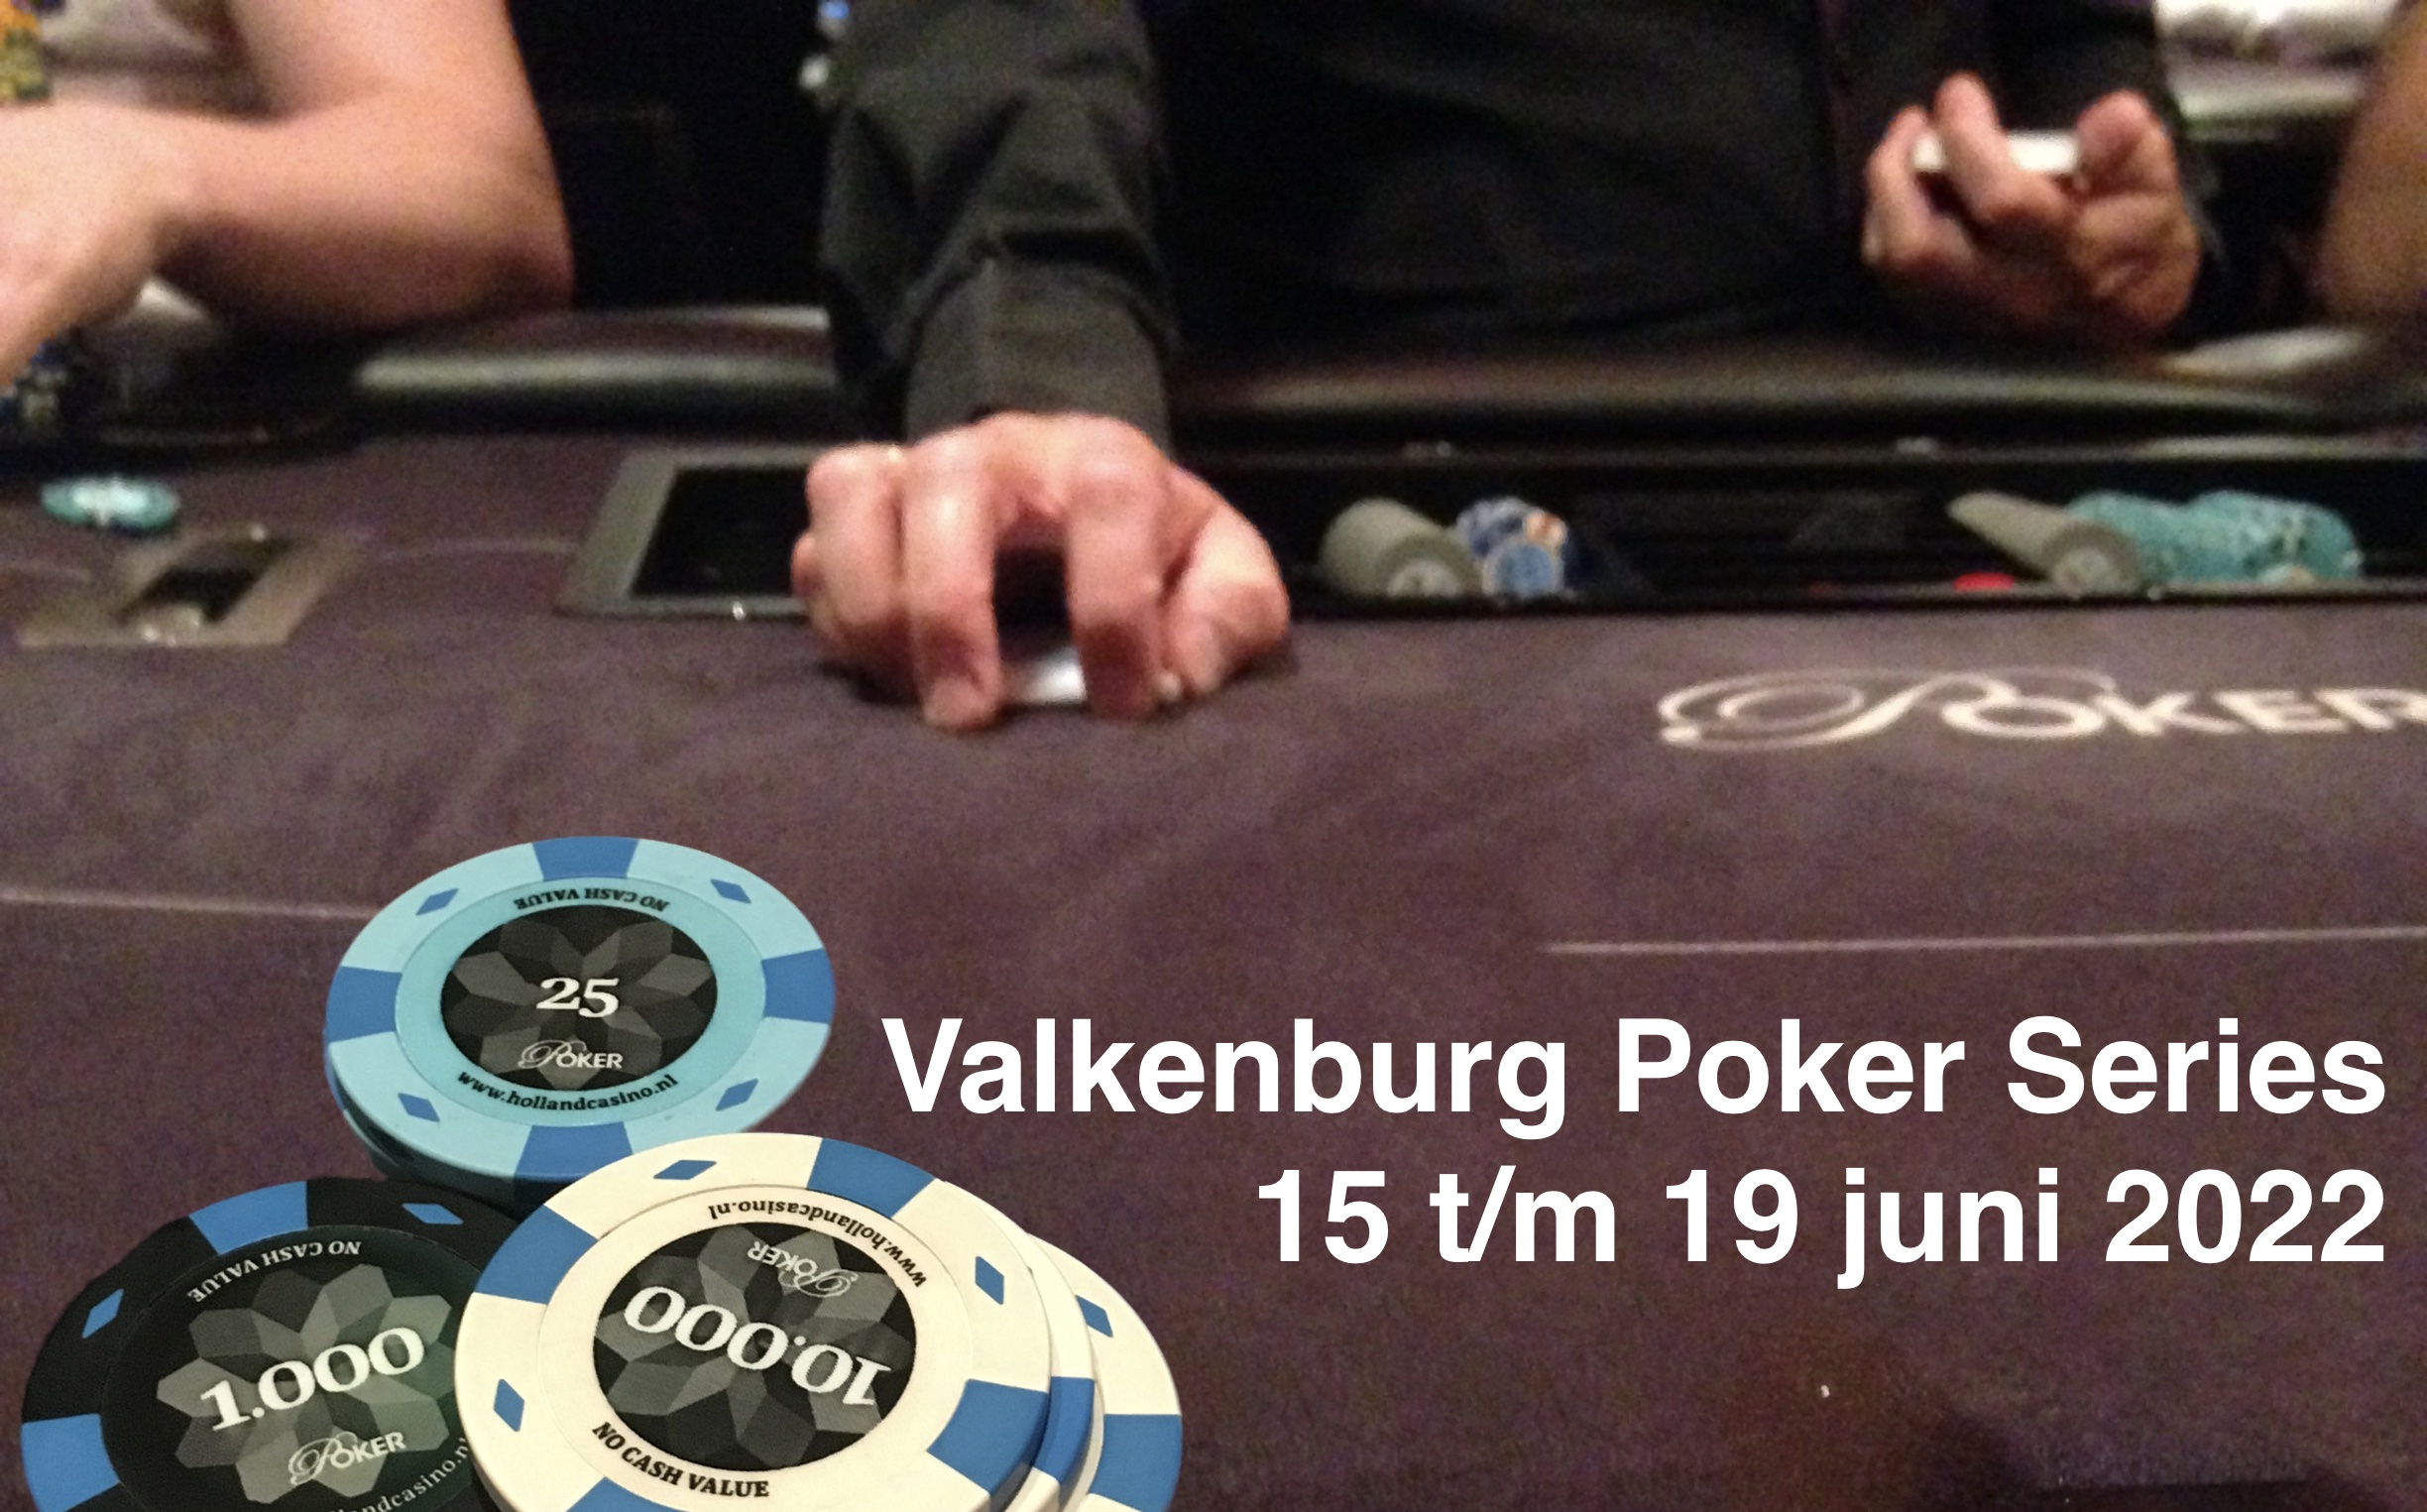 Valkenburg poker series komen er weer aan!